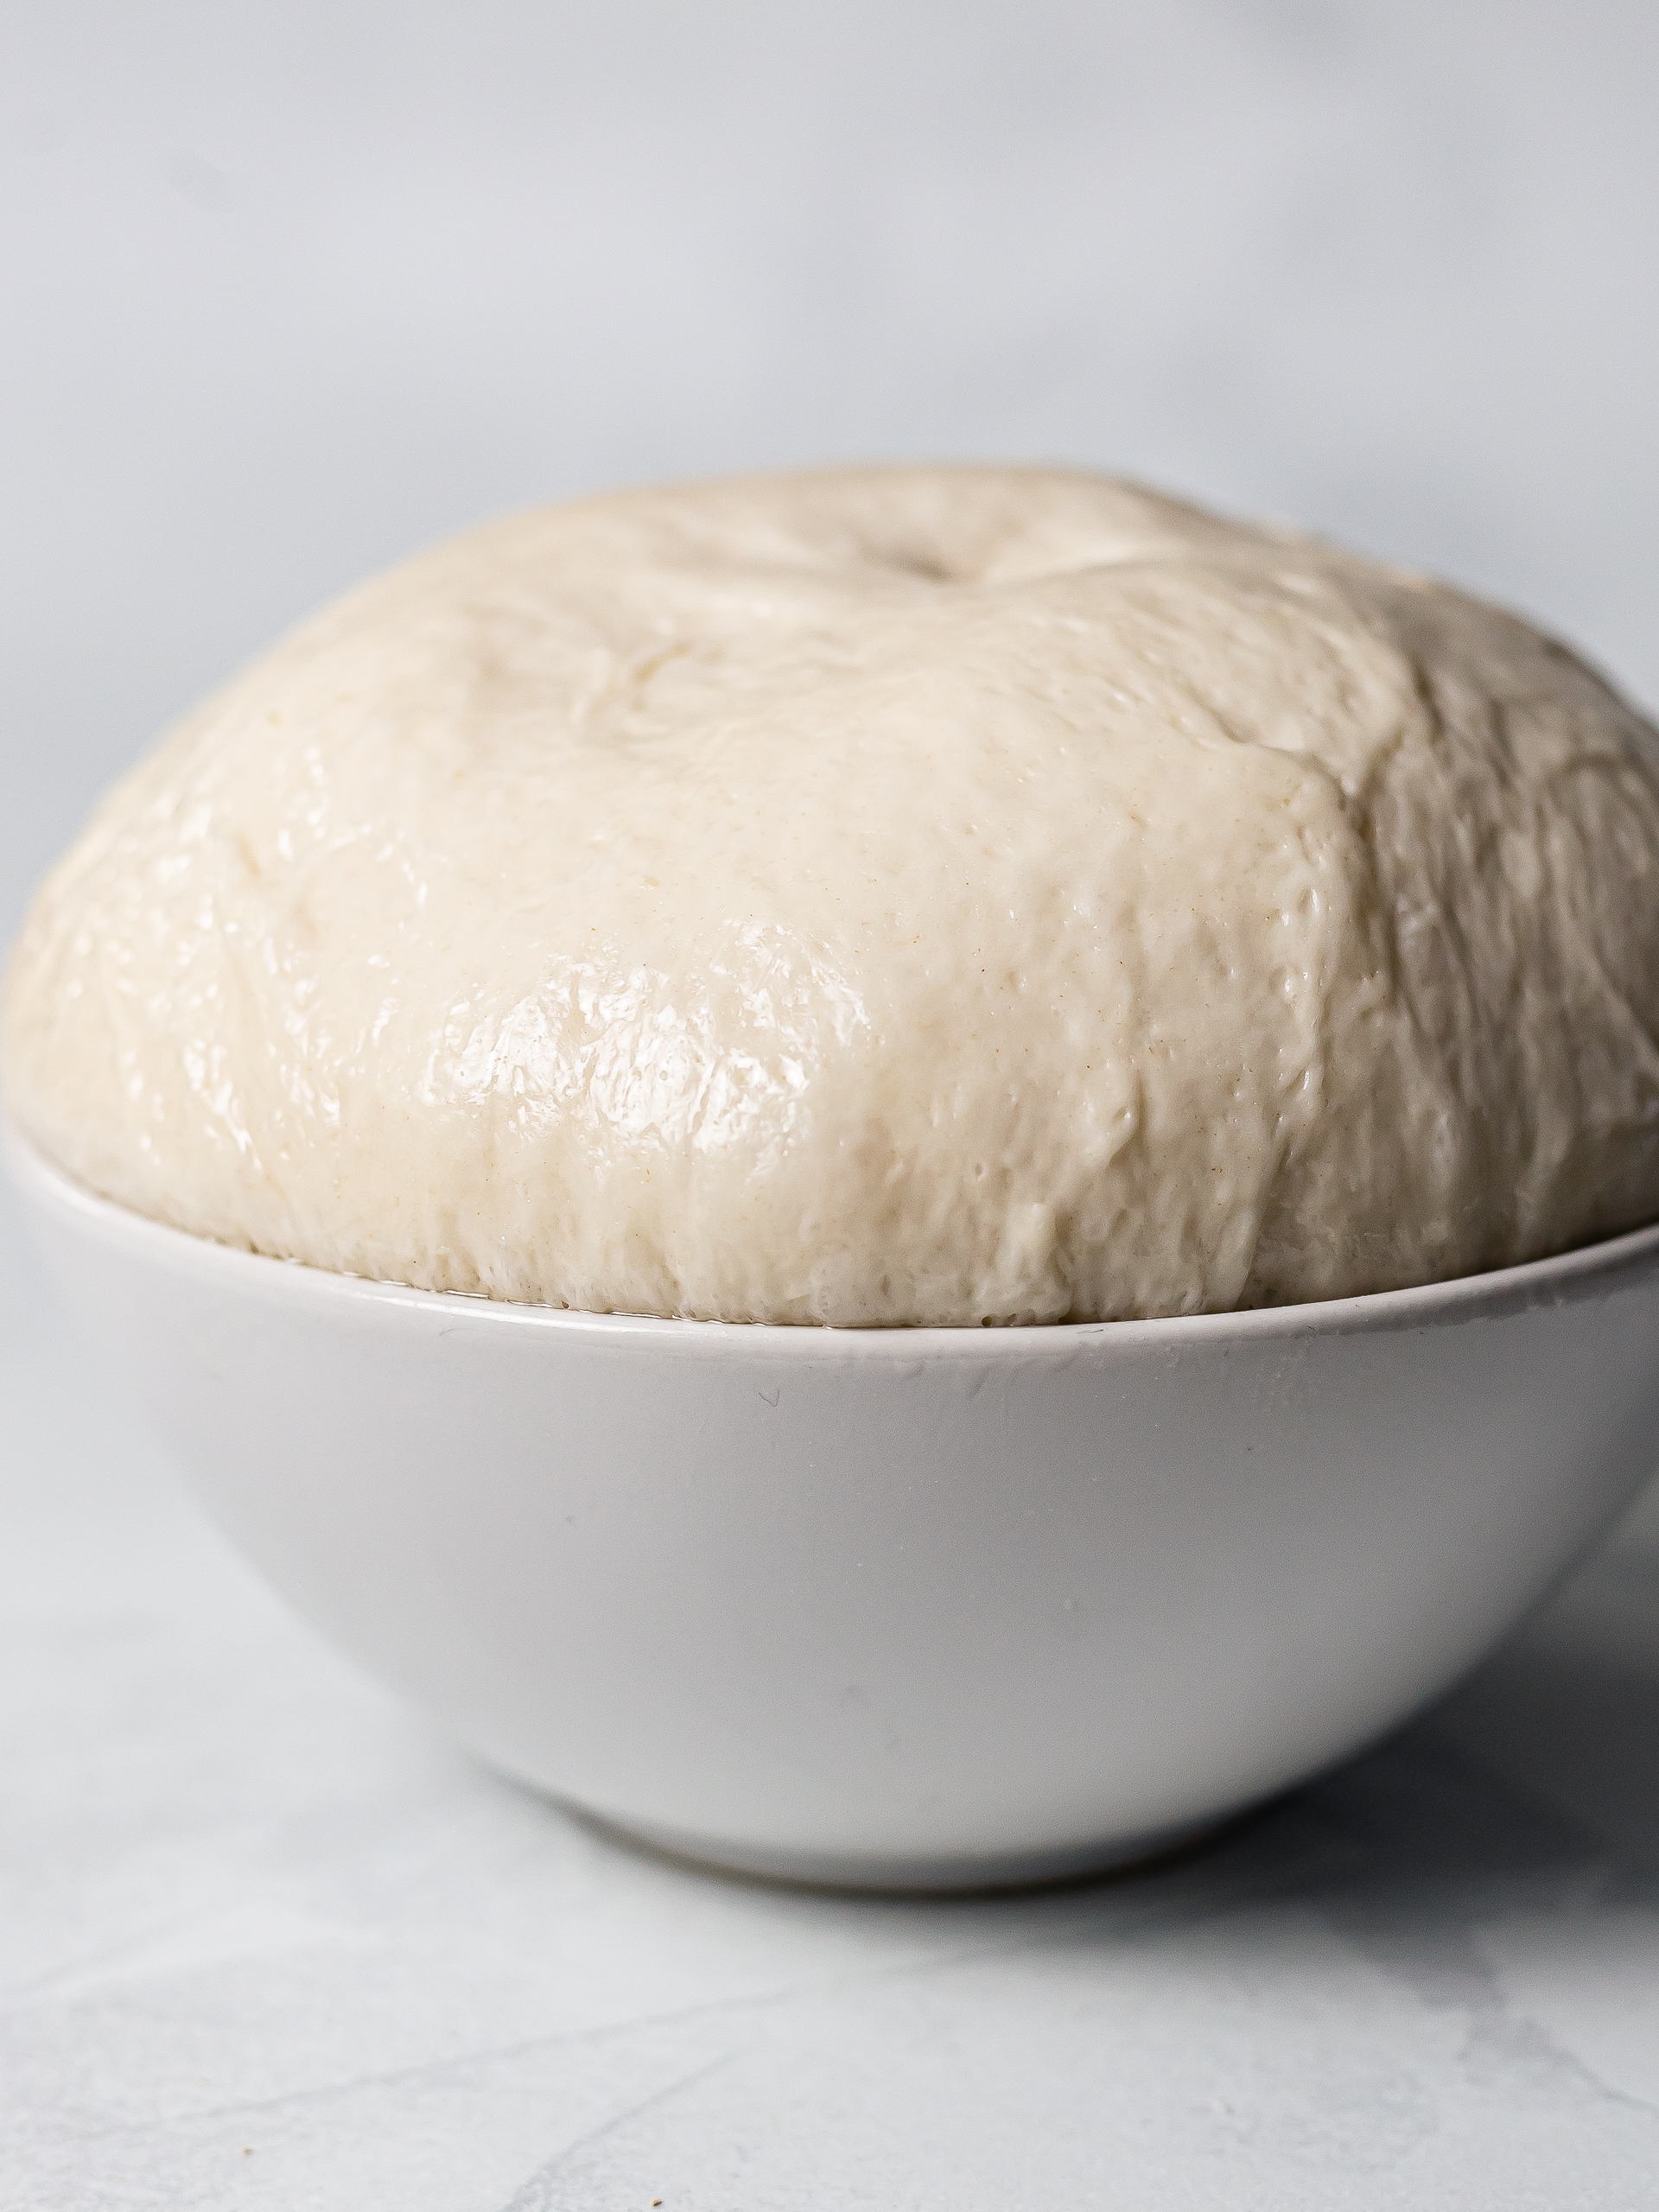 proved milk bread dough in a bowl